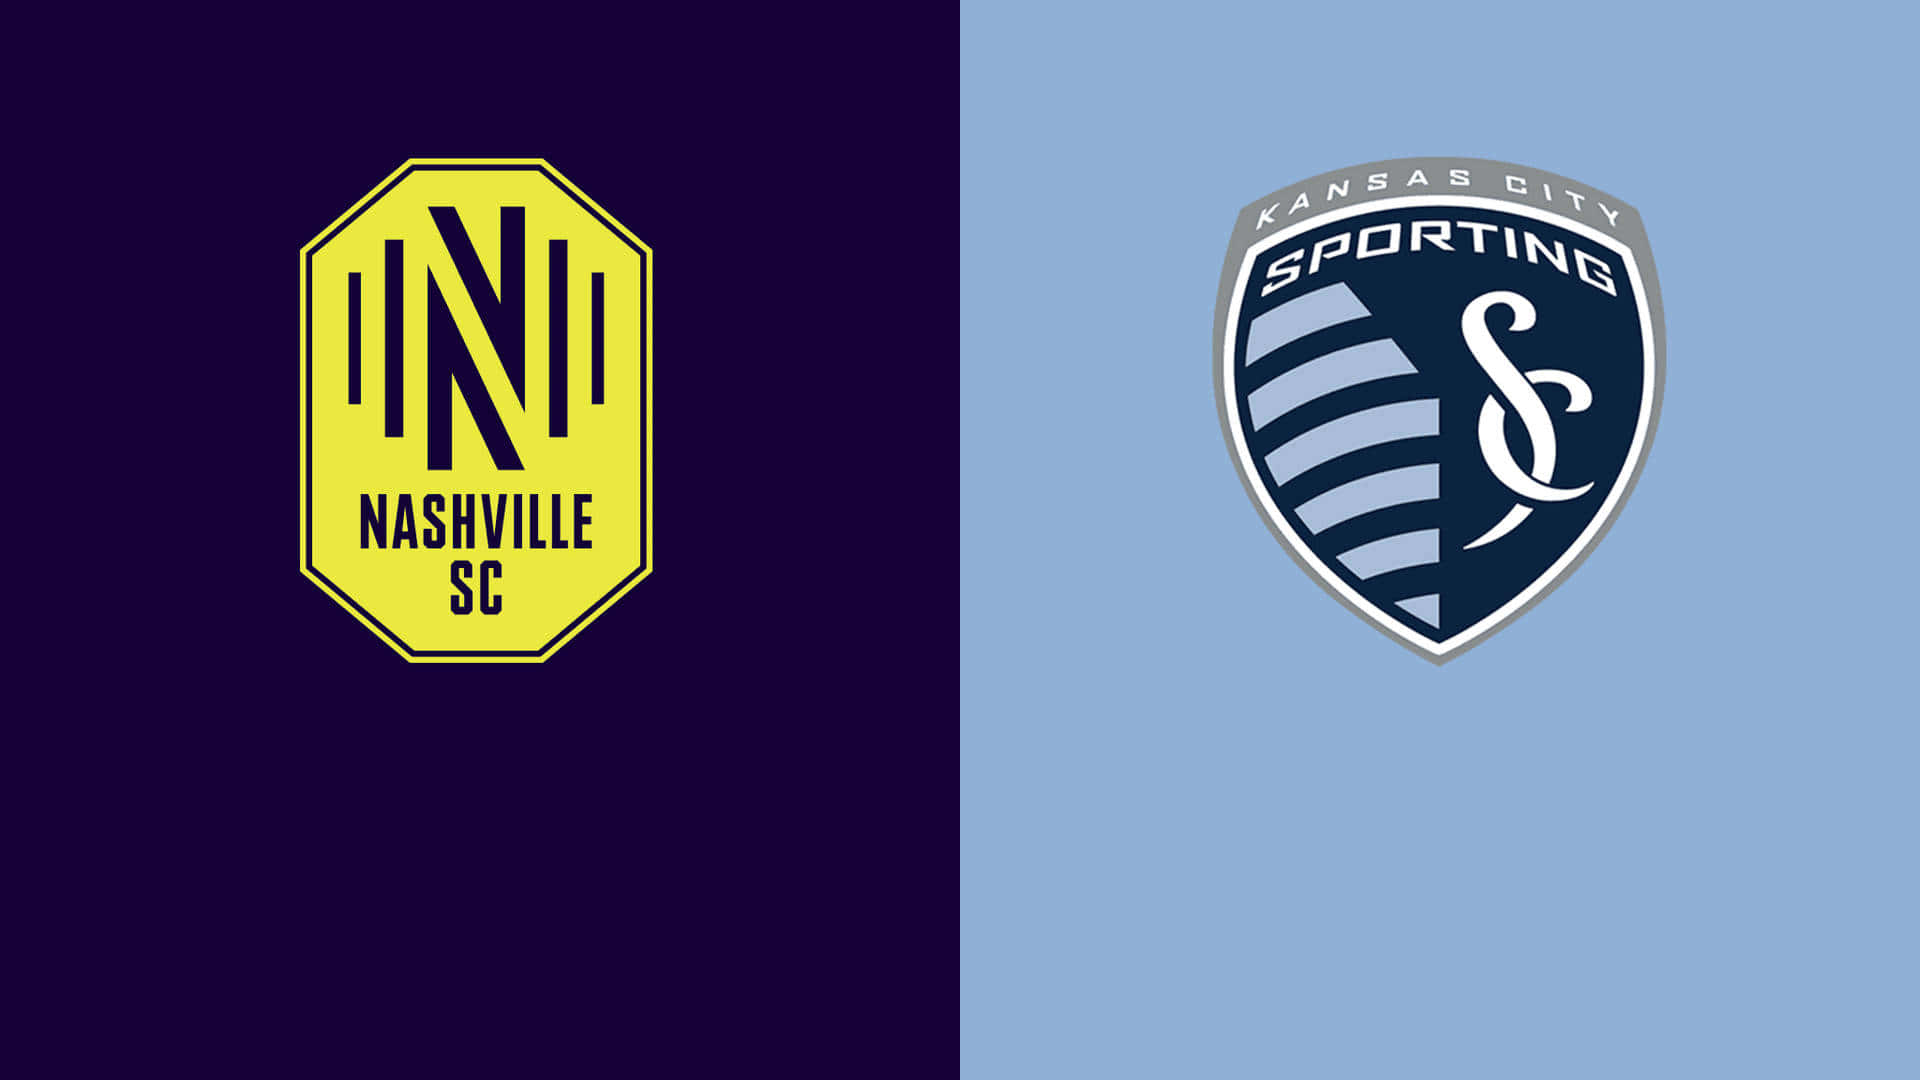 Nashville SC And Sporting Kansas City Logos Wallpaper